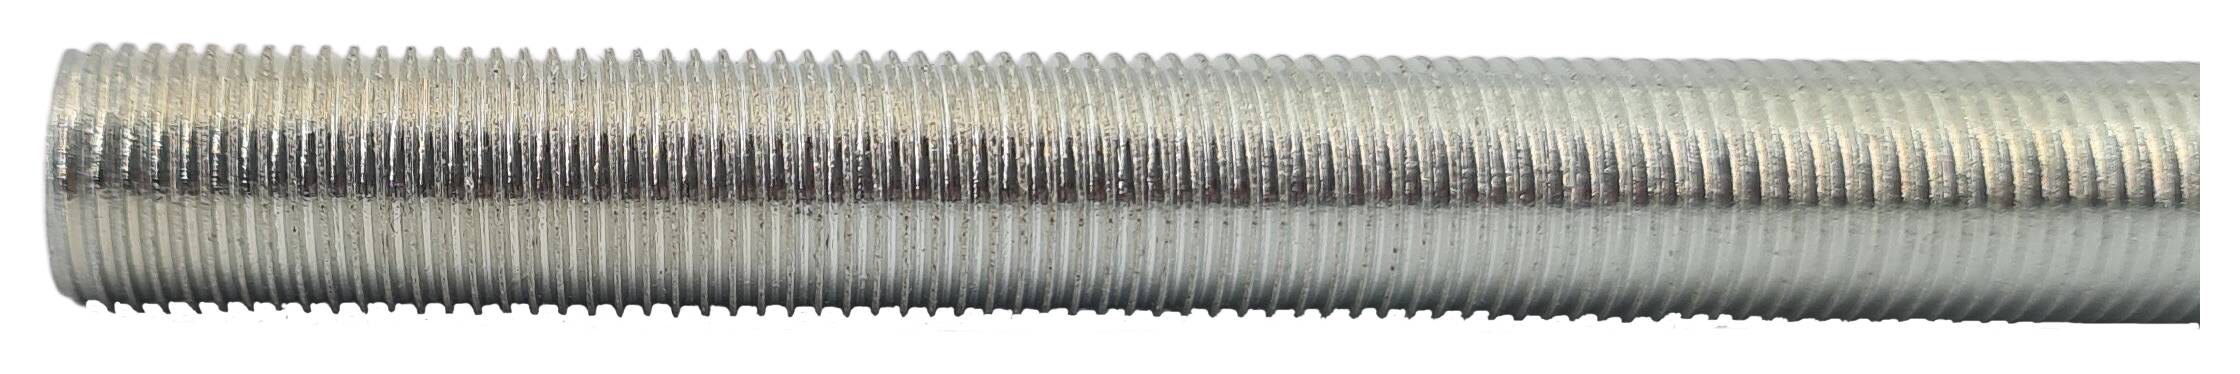 iron thread tube M10x1x340 round zinc